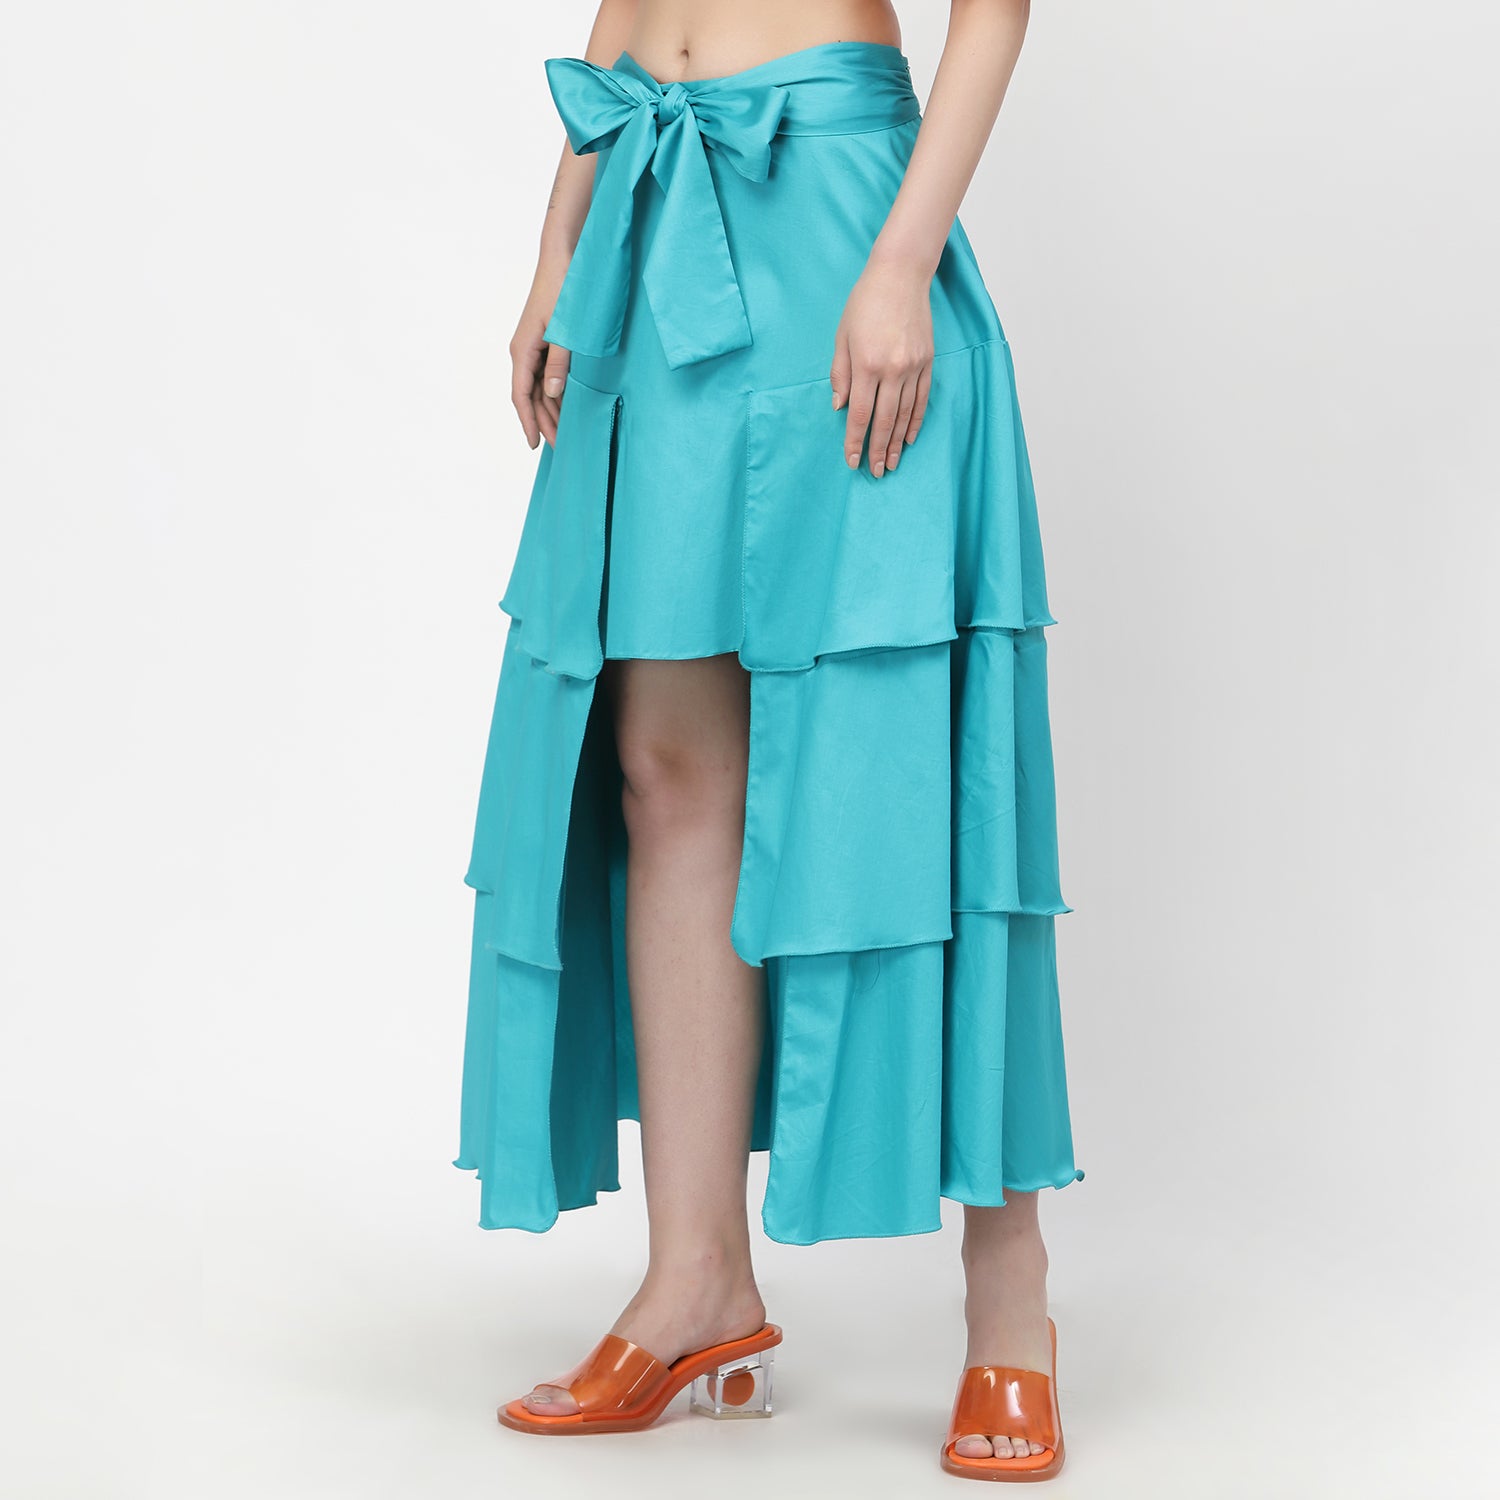 Turquoise Layered Skirt